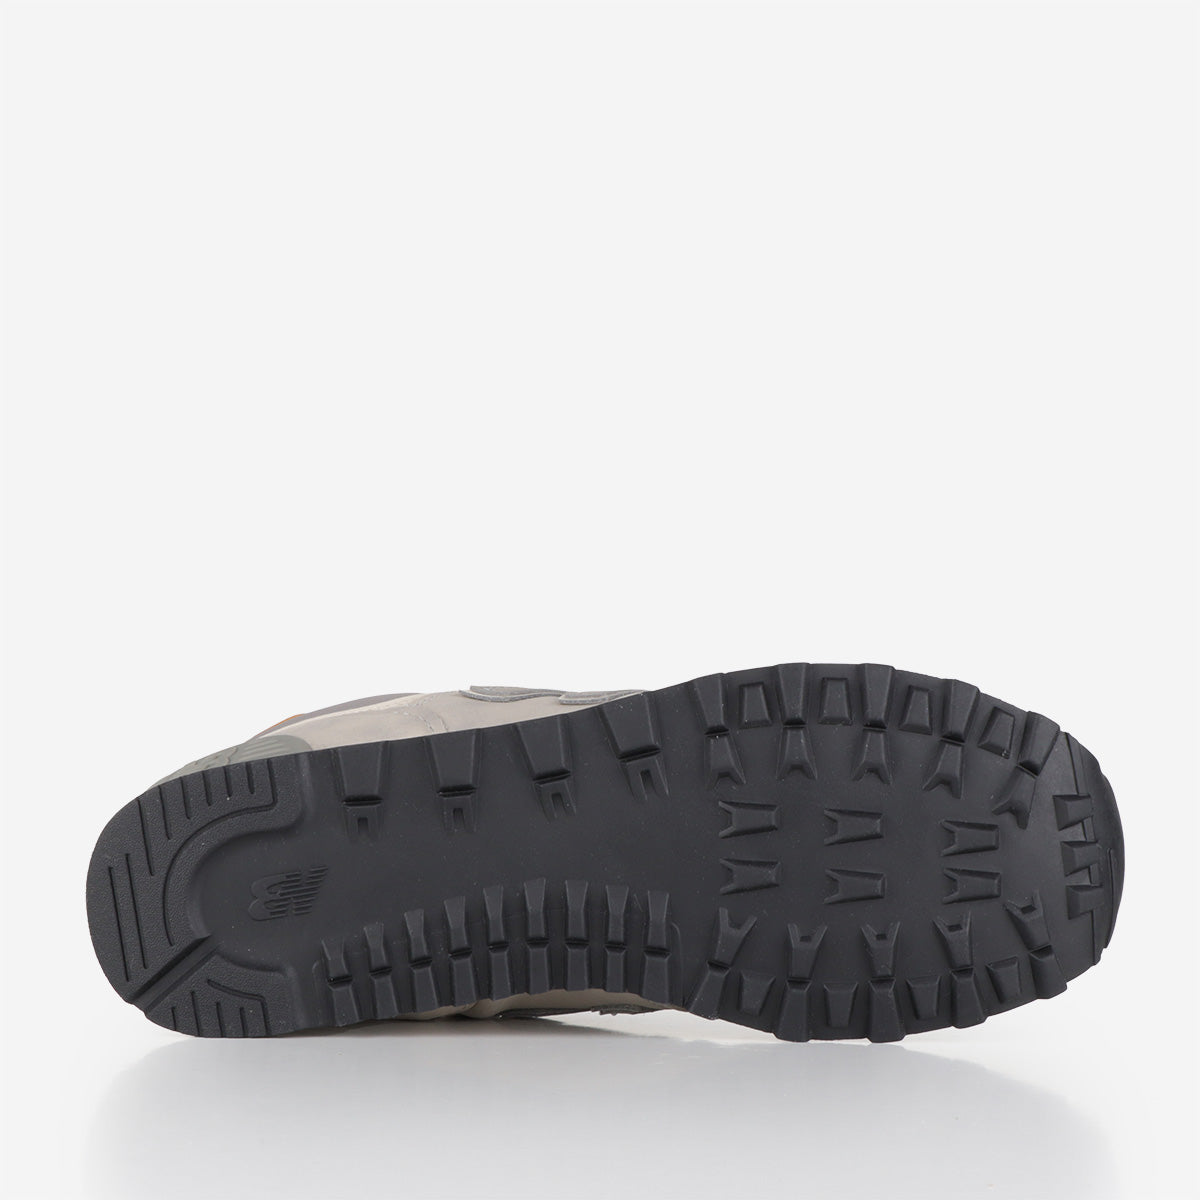 New Balance OU576GT 'Nostalgic Sepia' Shoes, Moonstruck Elephant Skin Coco Mocca, Detail Shot 4